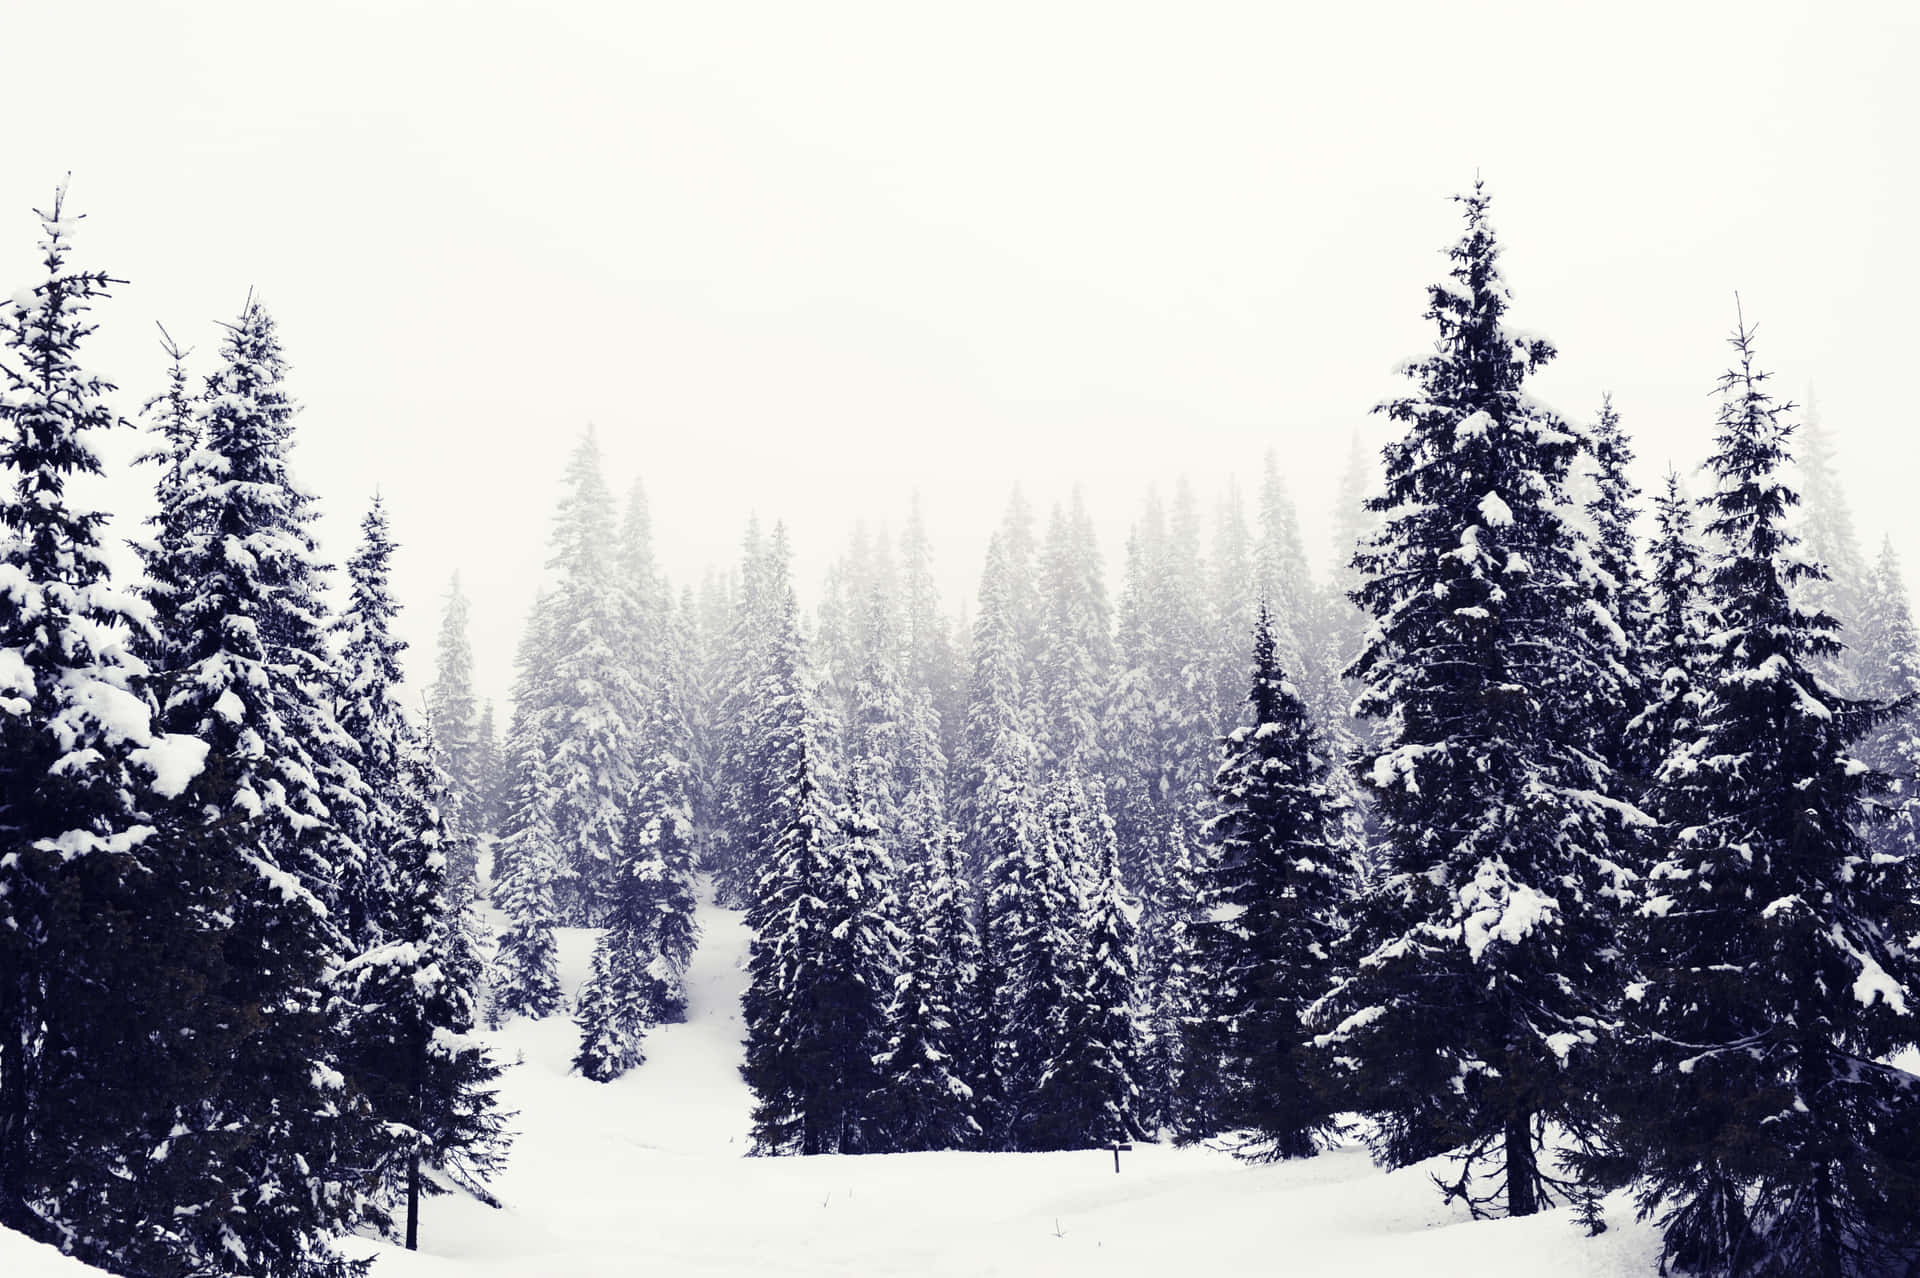 Enjoying a Winter Wonderland"